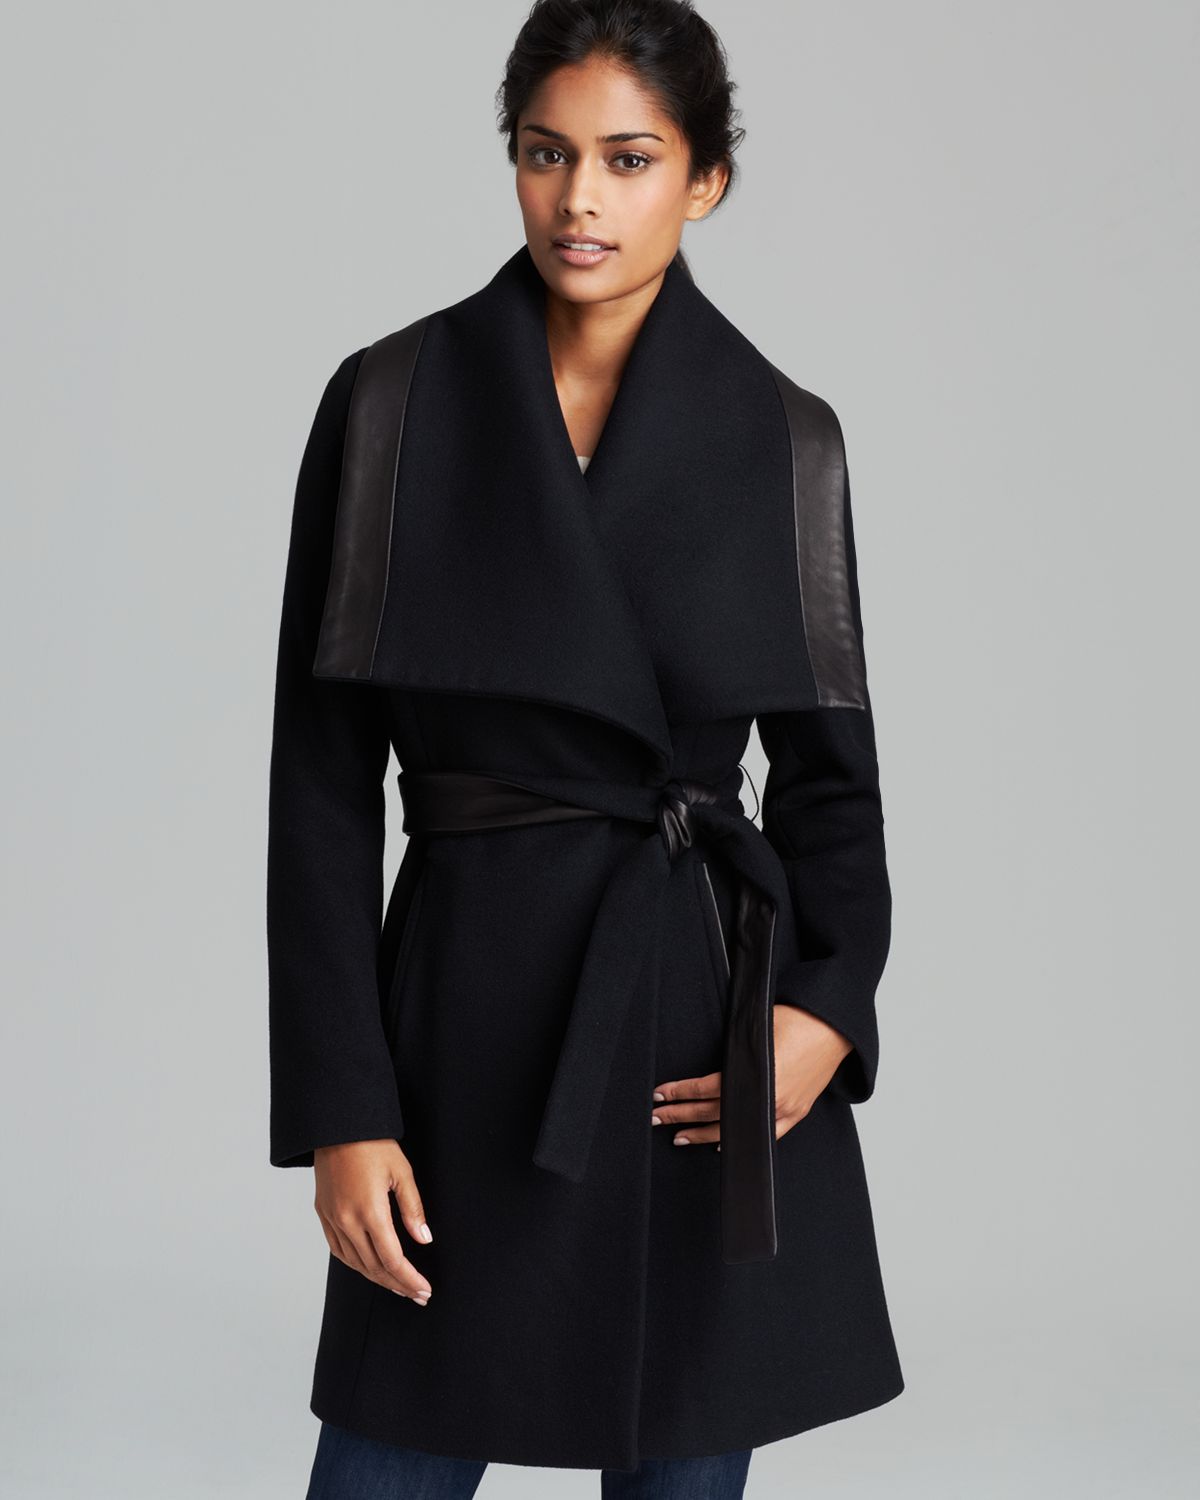 Elie tahari Coat - Marina Leather Trim Belted in Black | Lyst